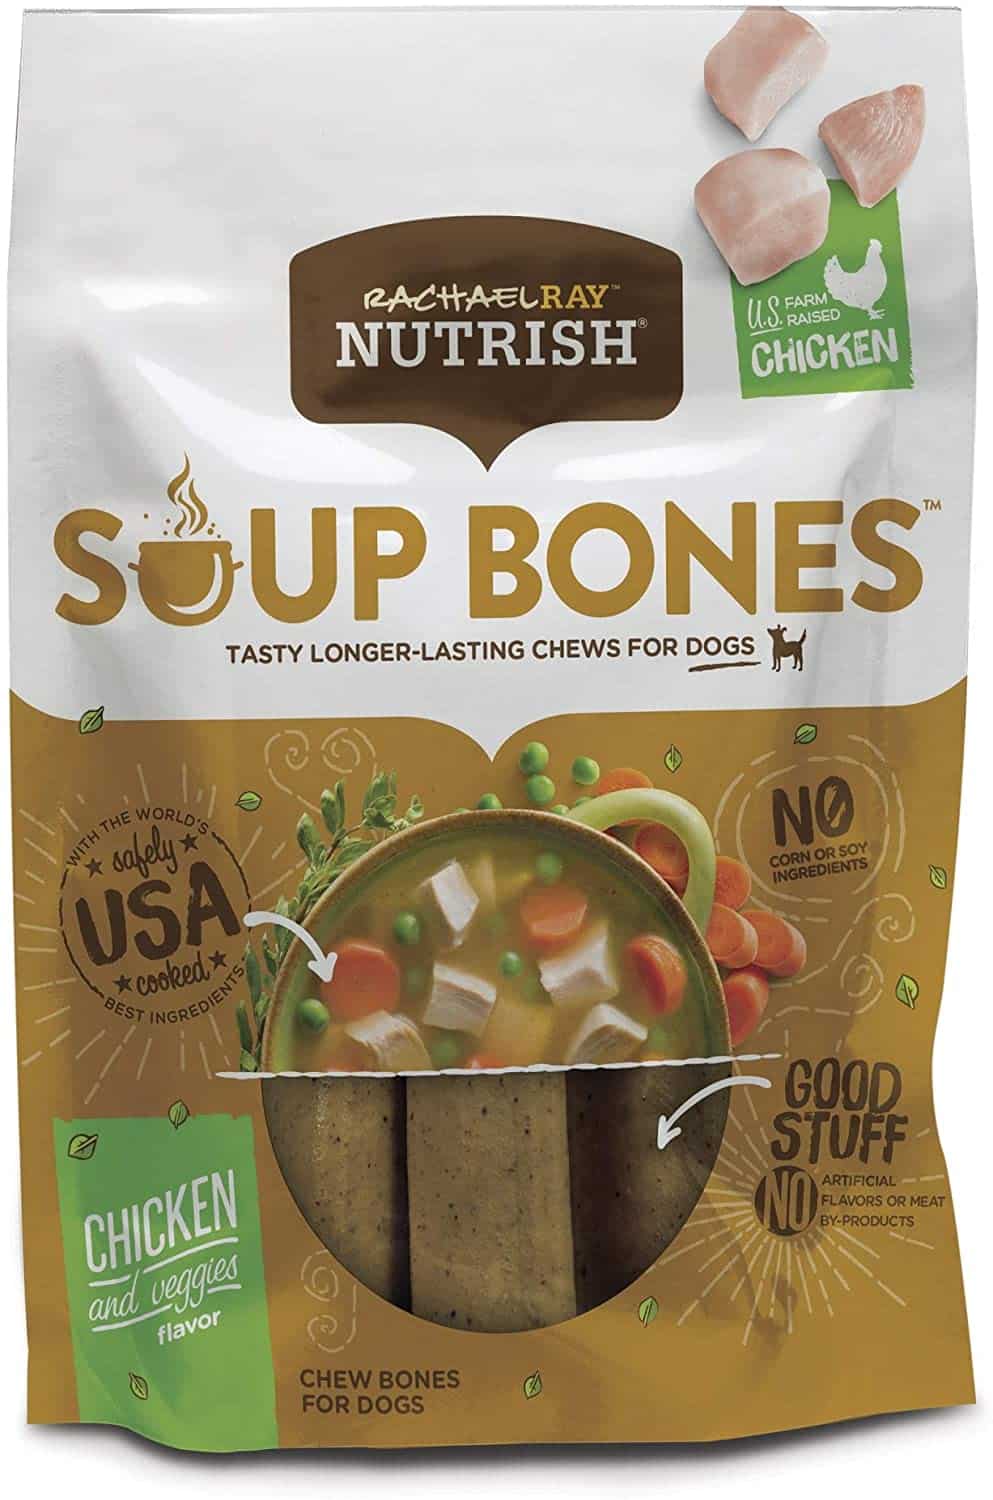 Rachael Ray Nutrish Soup Bones Dog Treats $5.49 (REG $10.99)